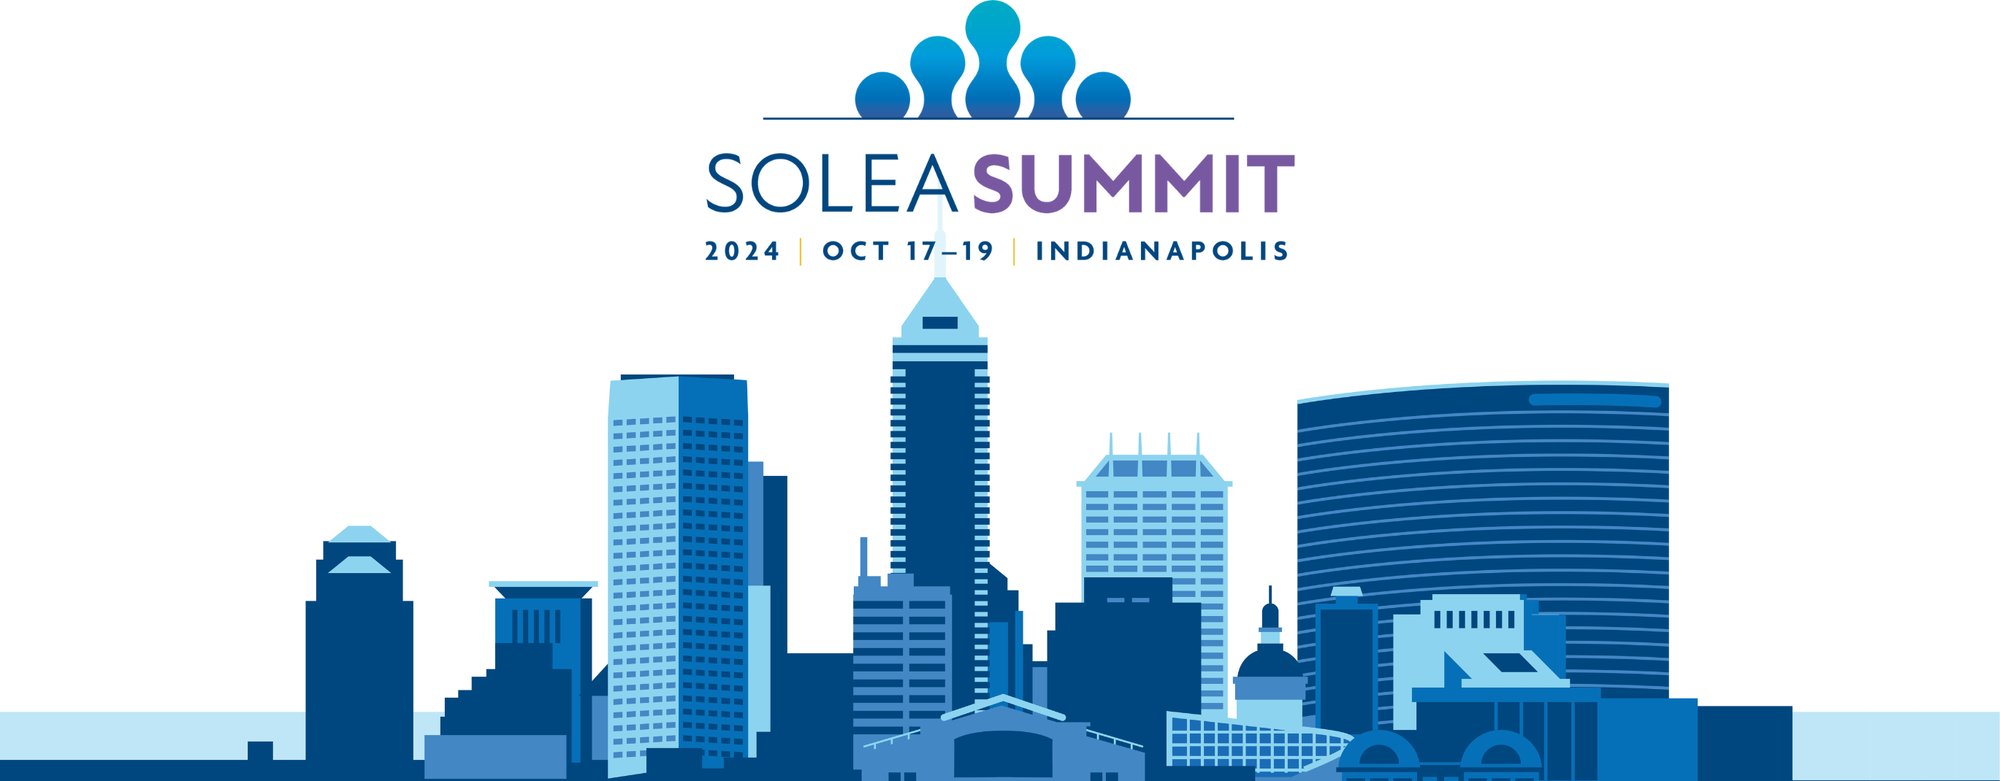 Solea Summit 2024 Website Header (Convergentdental.com)